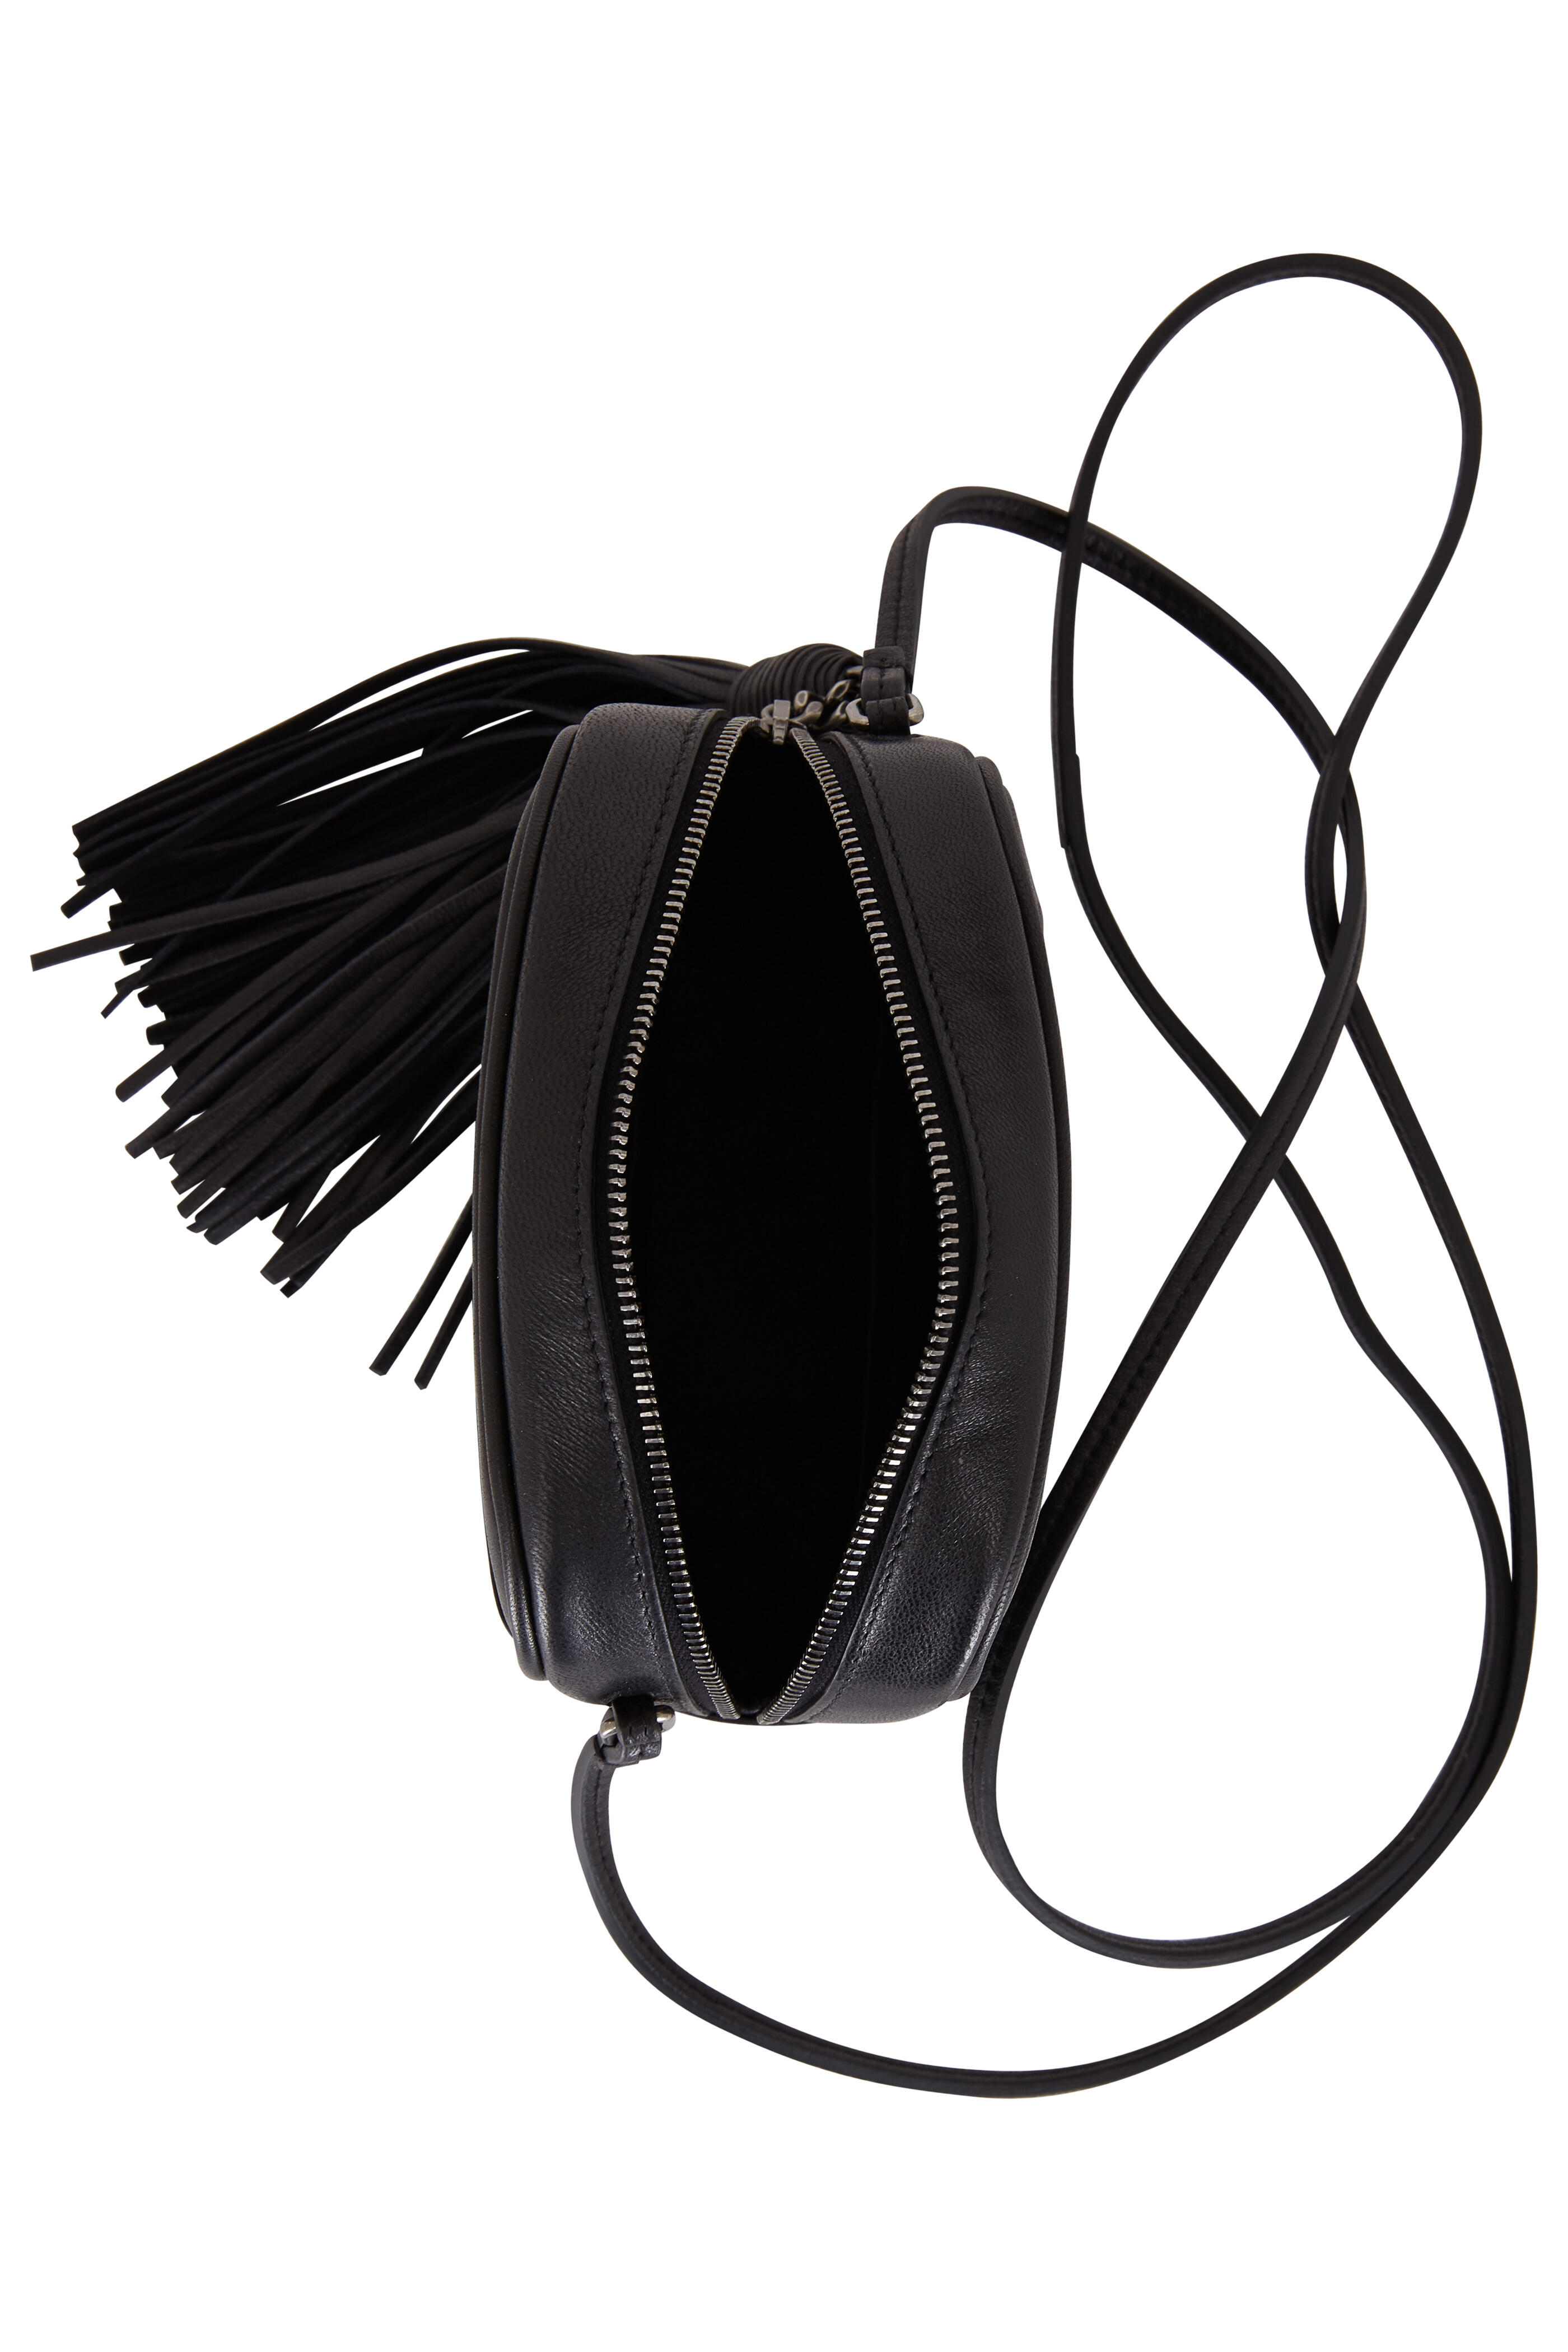 Saint Laurent Heart Studded Leather Monogram Blogger Bag, Saint Laurent  Handbags